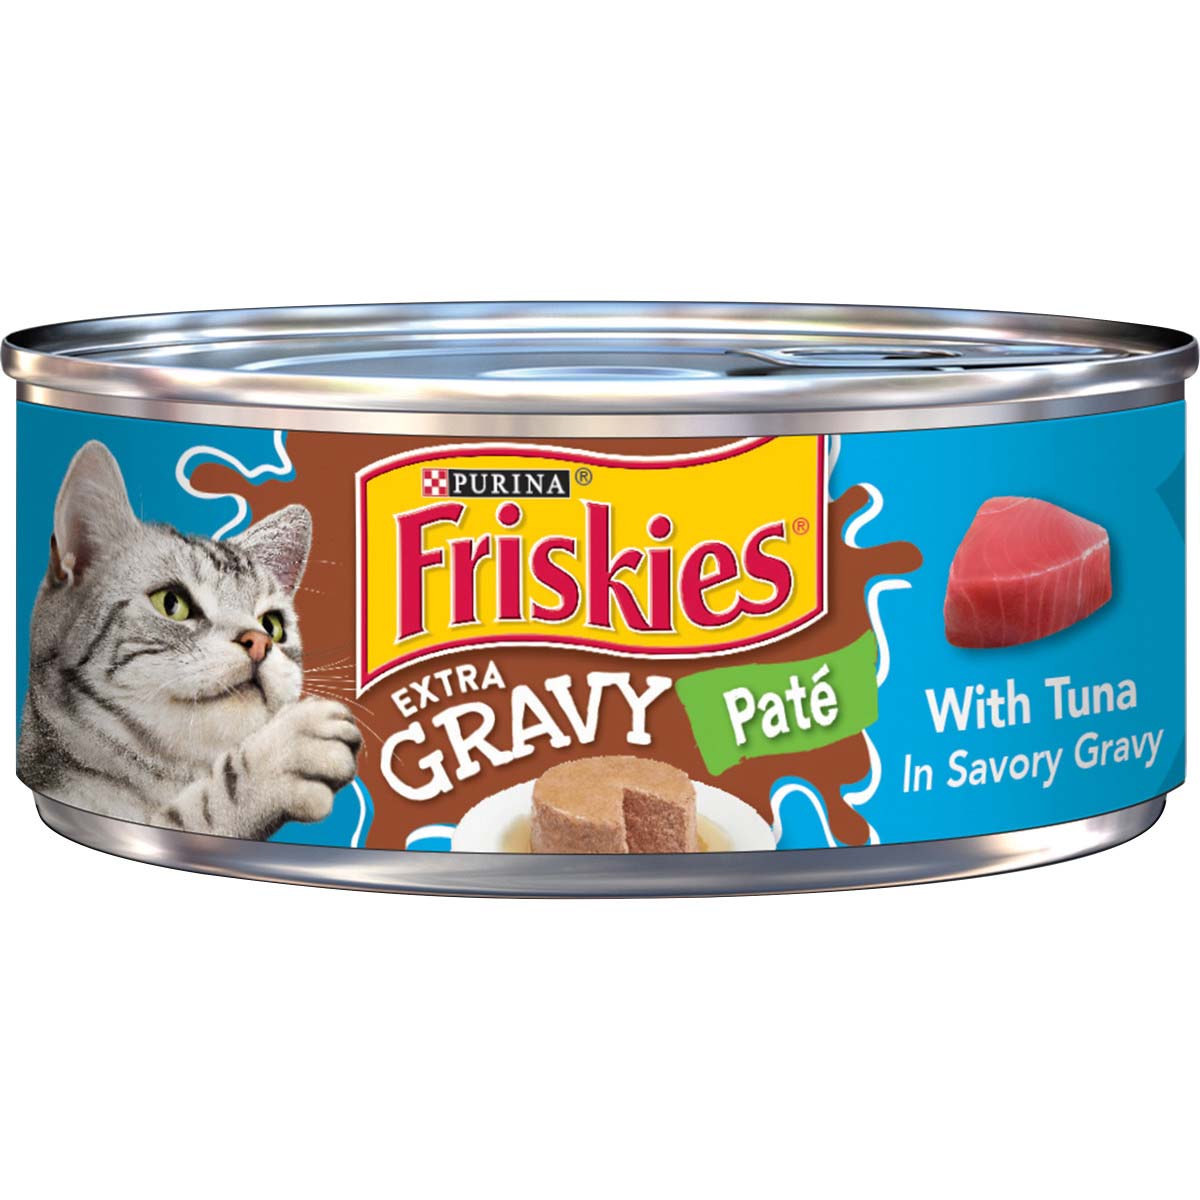 Friskies Cat Food Extra Gravy Pate Tuna 5.5oz